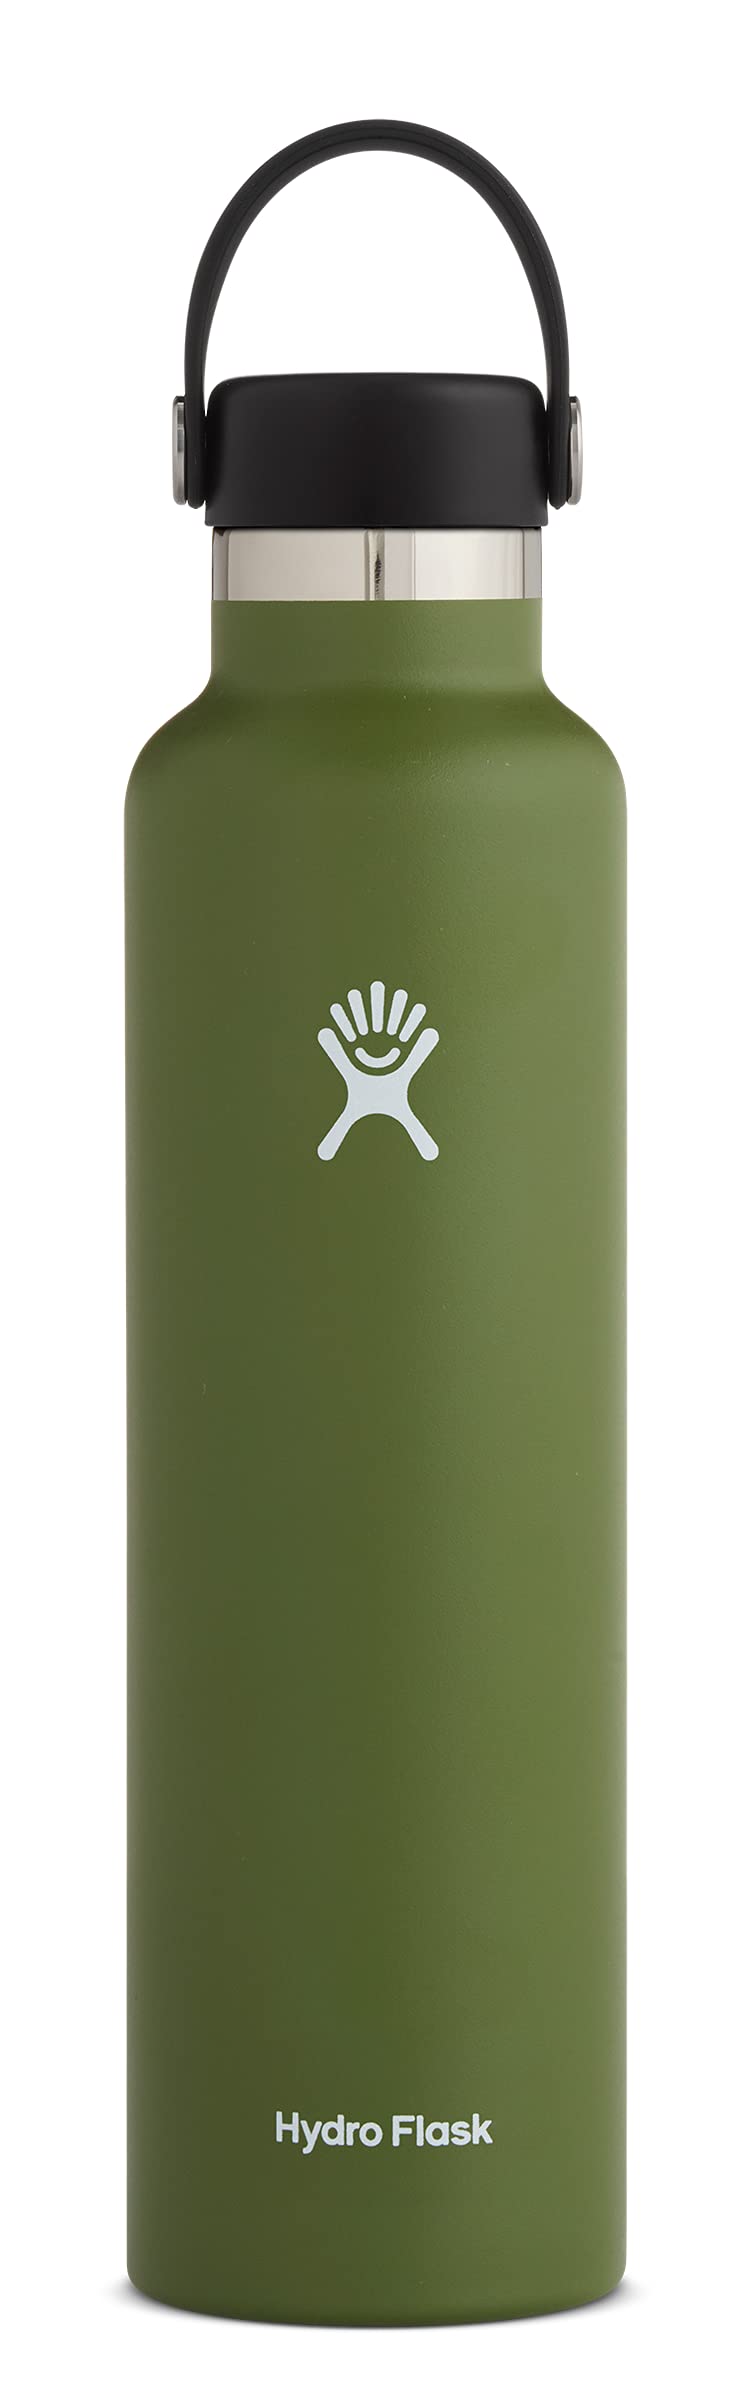 Hydro Flask 24 oz Leak Proof Sports Water Bottle - Standard Mouth with BPA Free Flex Cap - Olive